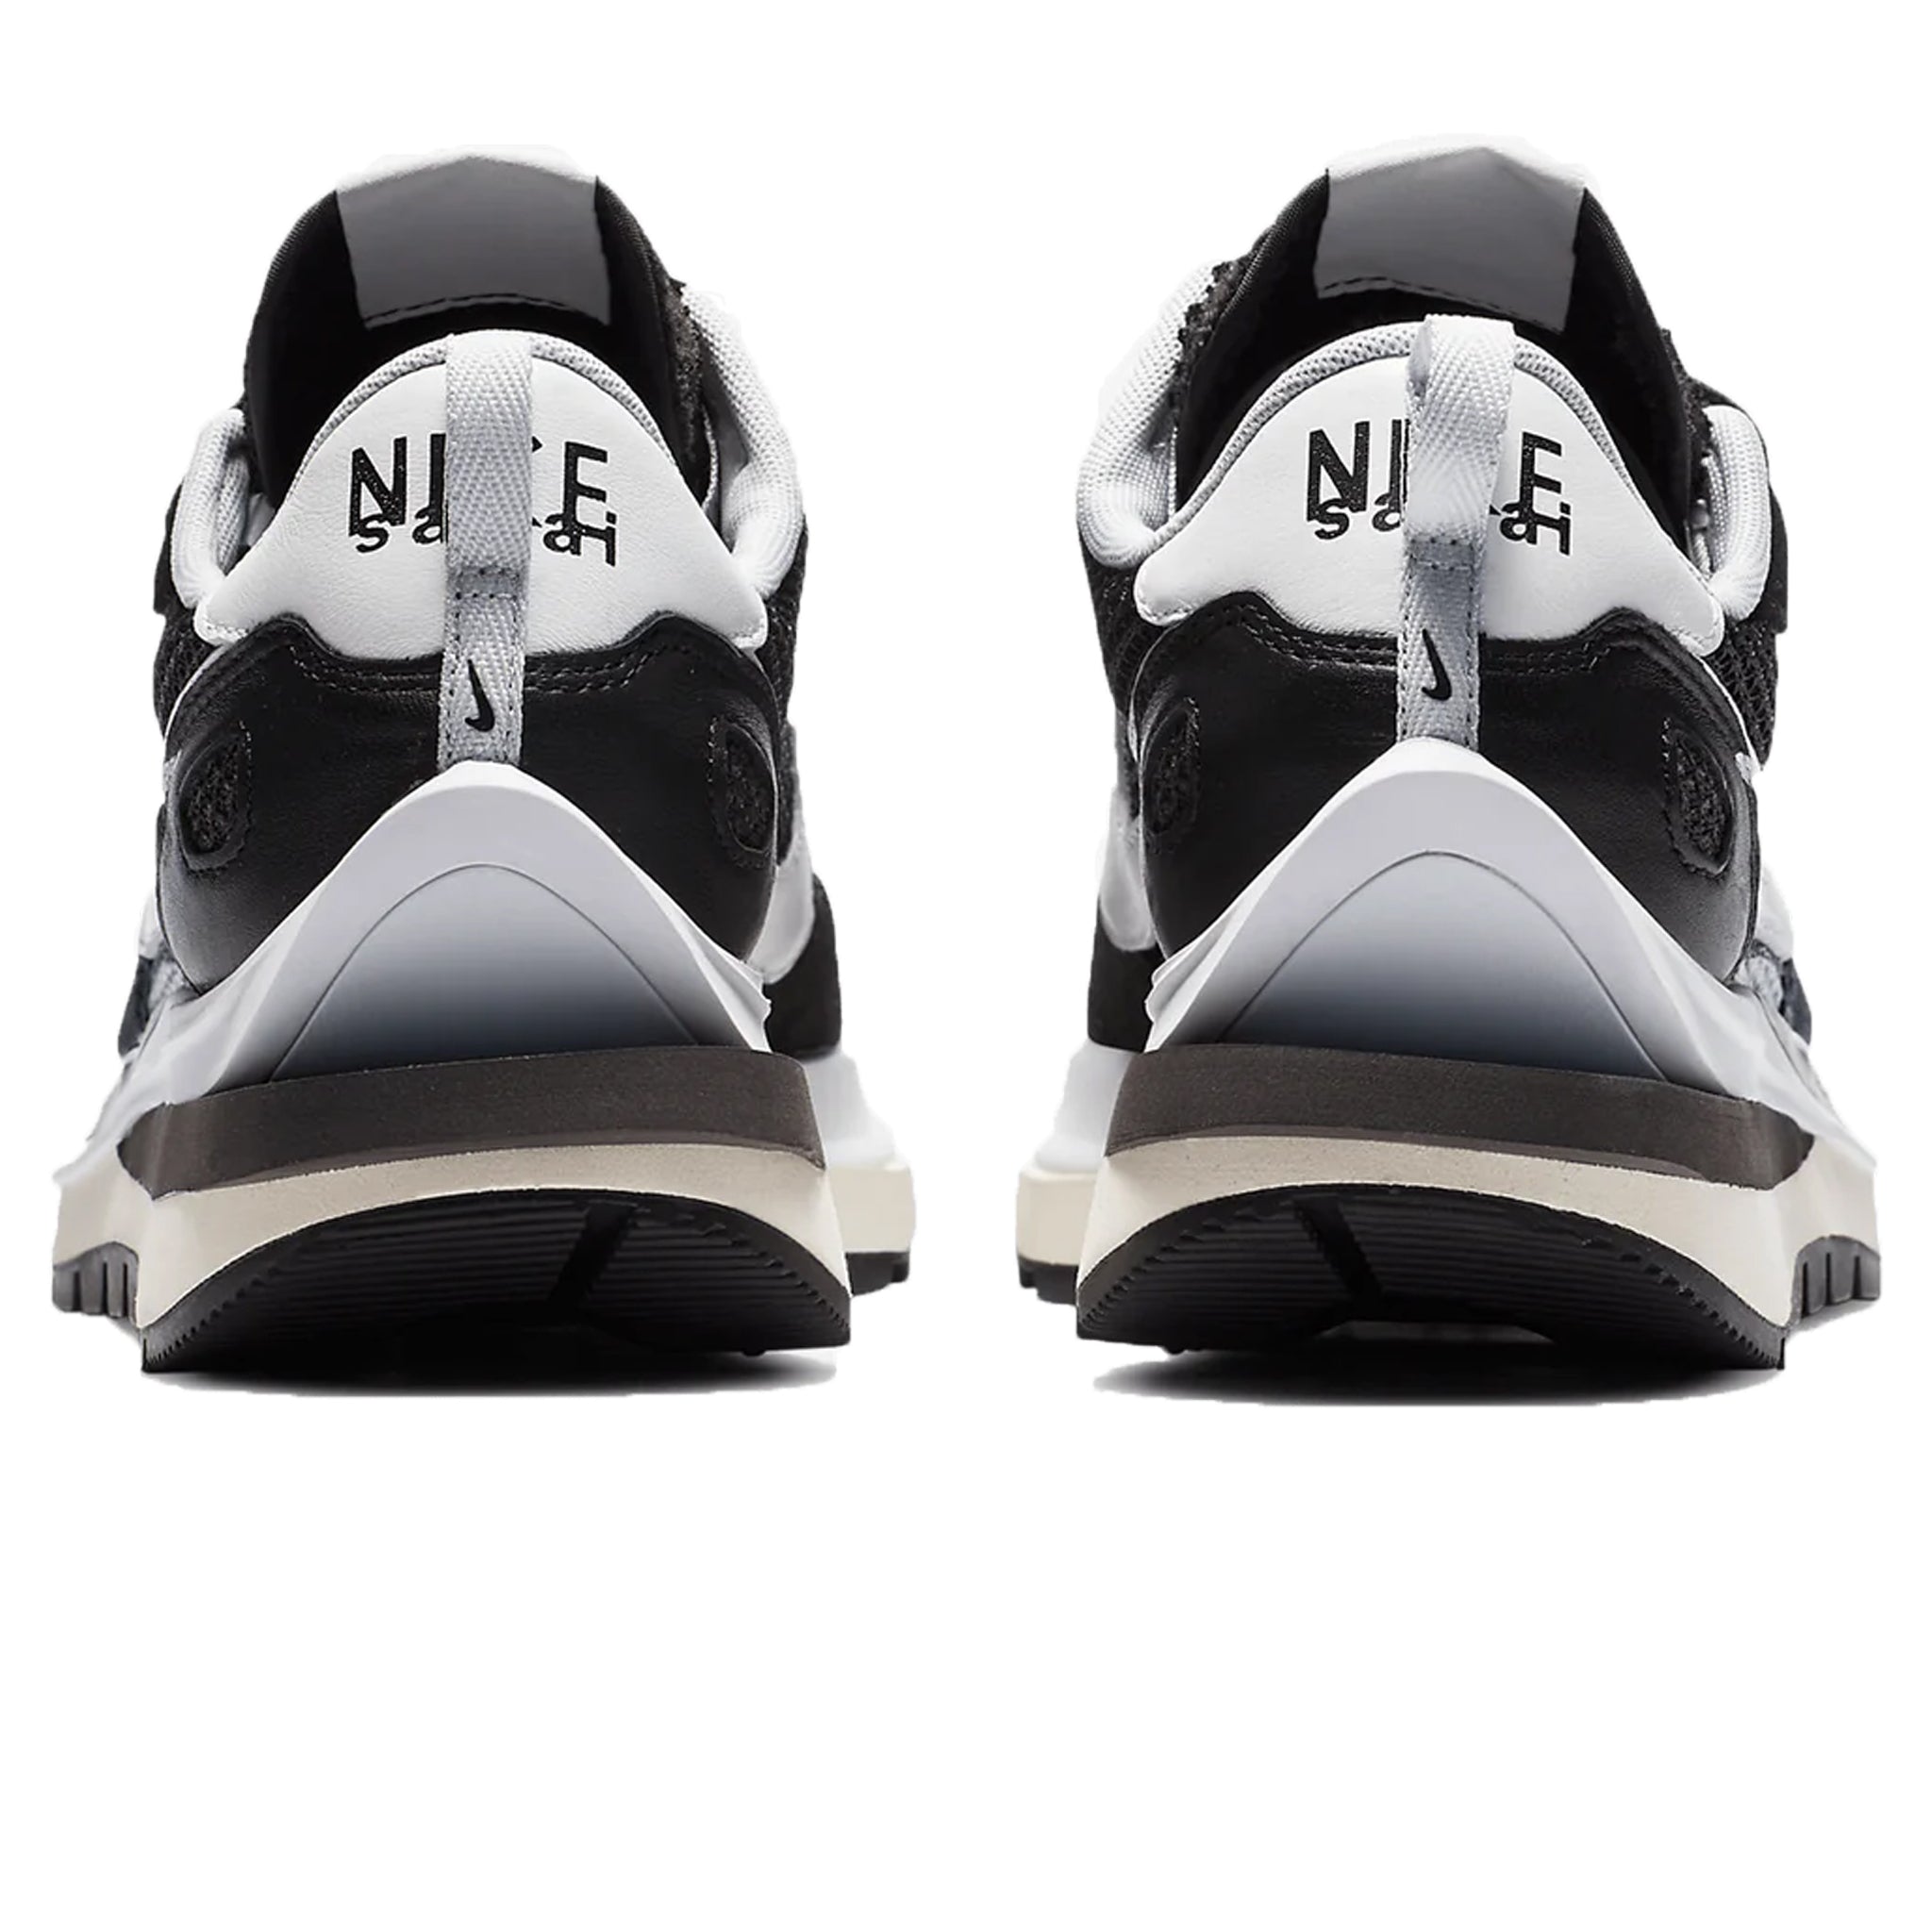 Heel view of Nike x Sacai Vaporwaffle Black White Sneaker CV1363-001